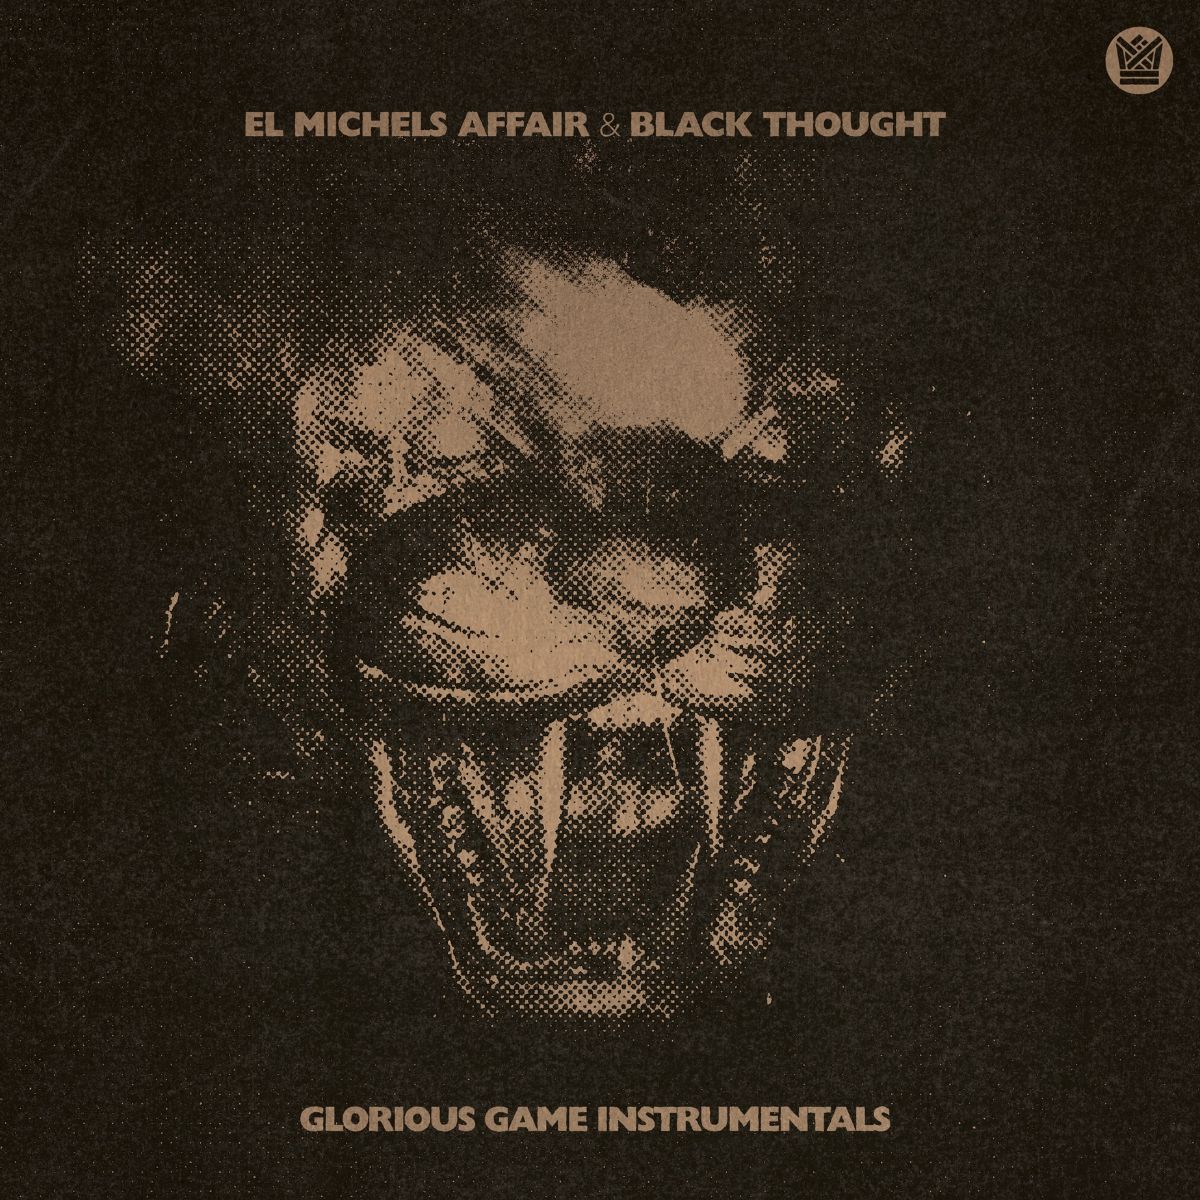 El Michels Affair & Black Thought - Glorious Game (Instrumentals): Limited Blood Smoke Vinyl LP